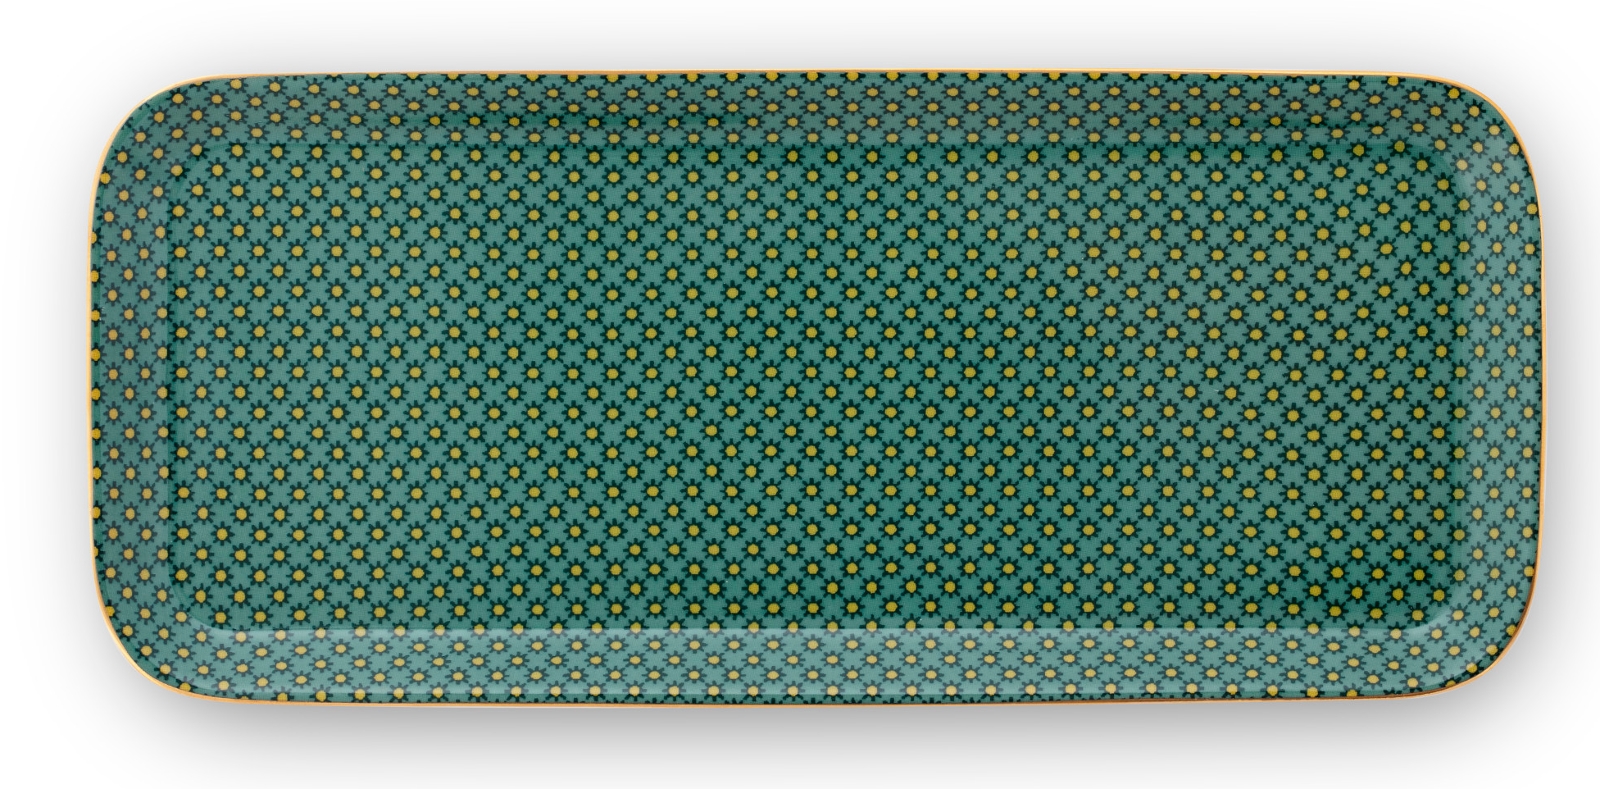 PIP STUDIO Twinkle Star Ablage green 27 x 12 x 1,5 cm